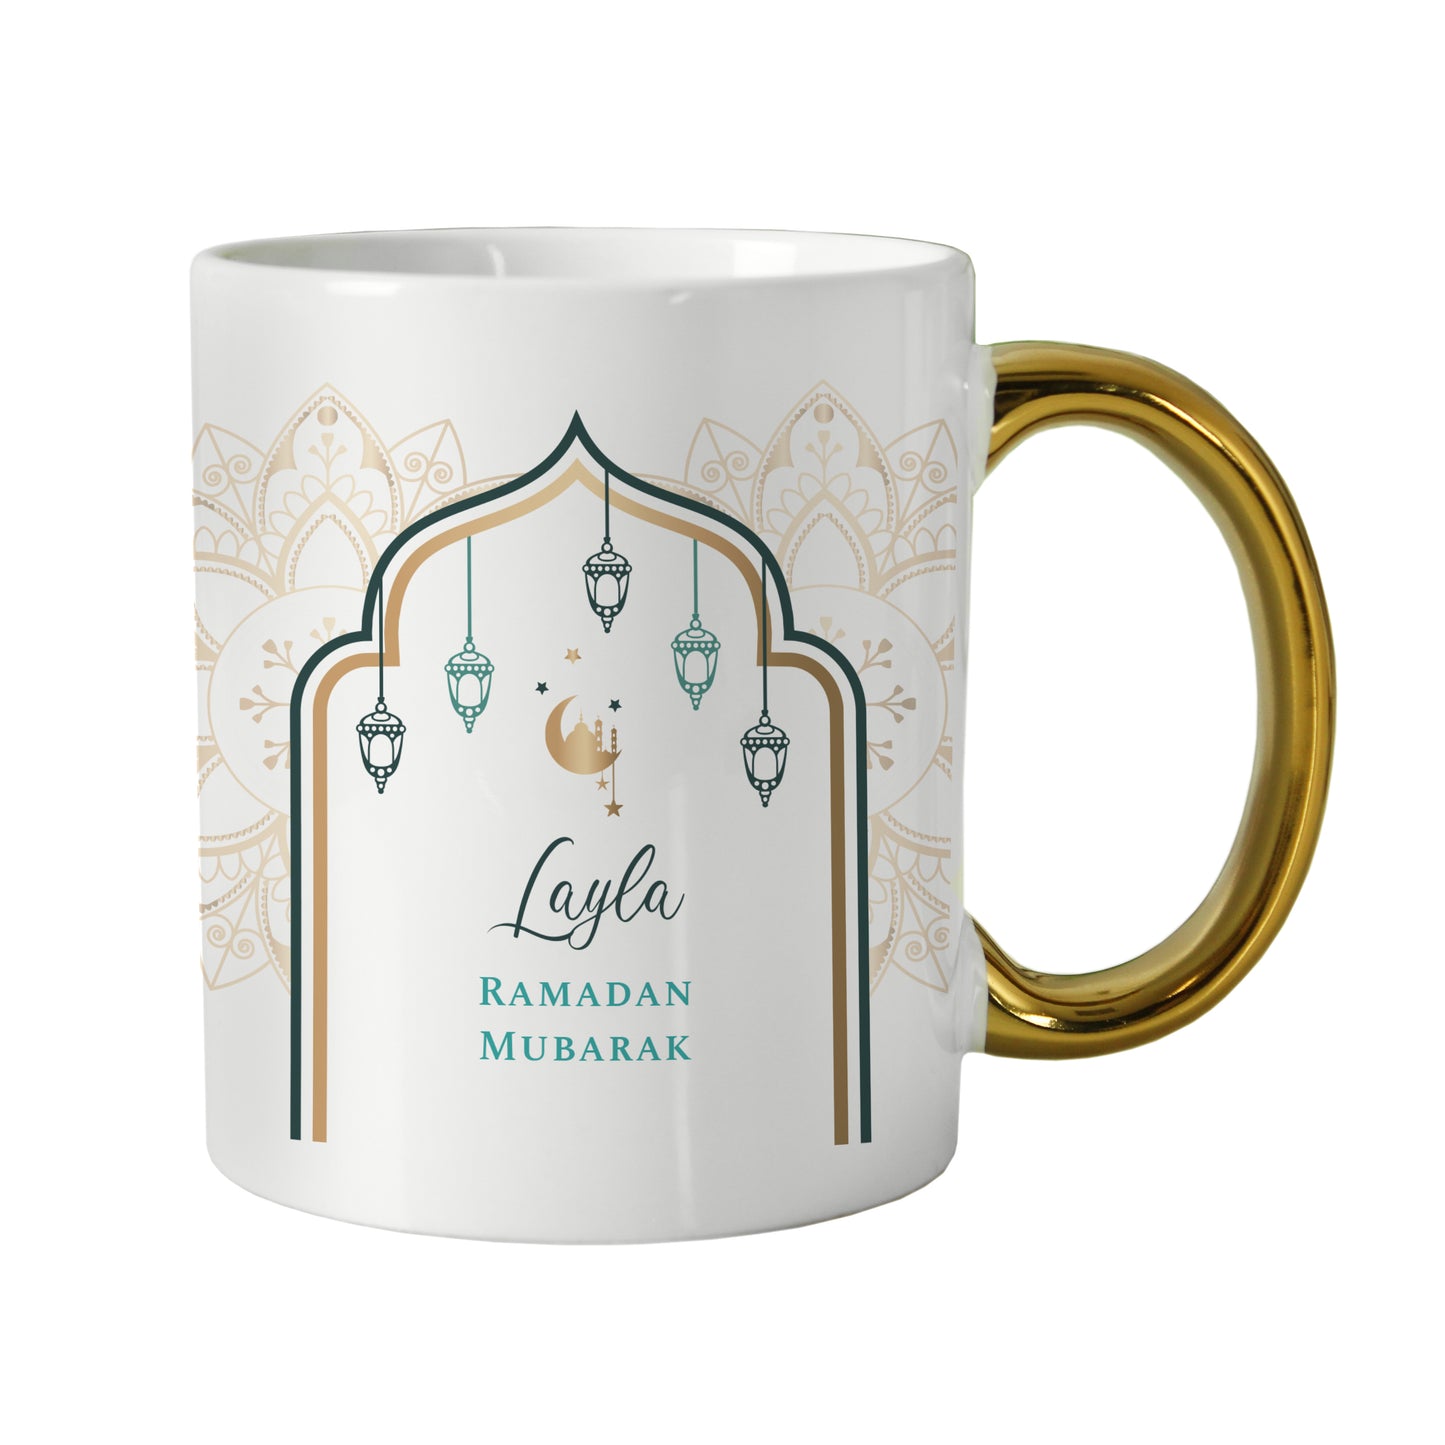 Personalised Eid and Ramadan Gold Handled Mug - Personalise It!